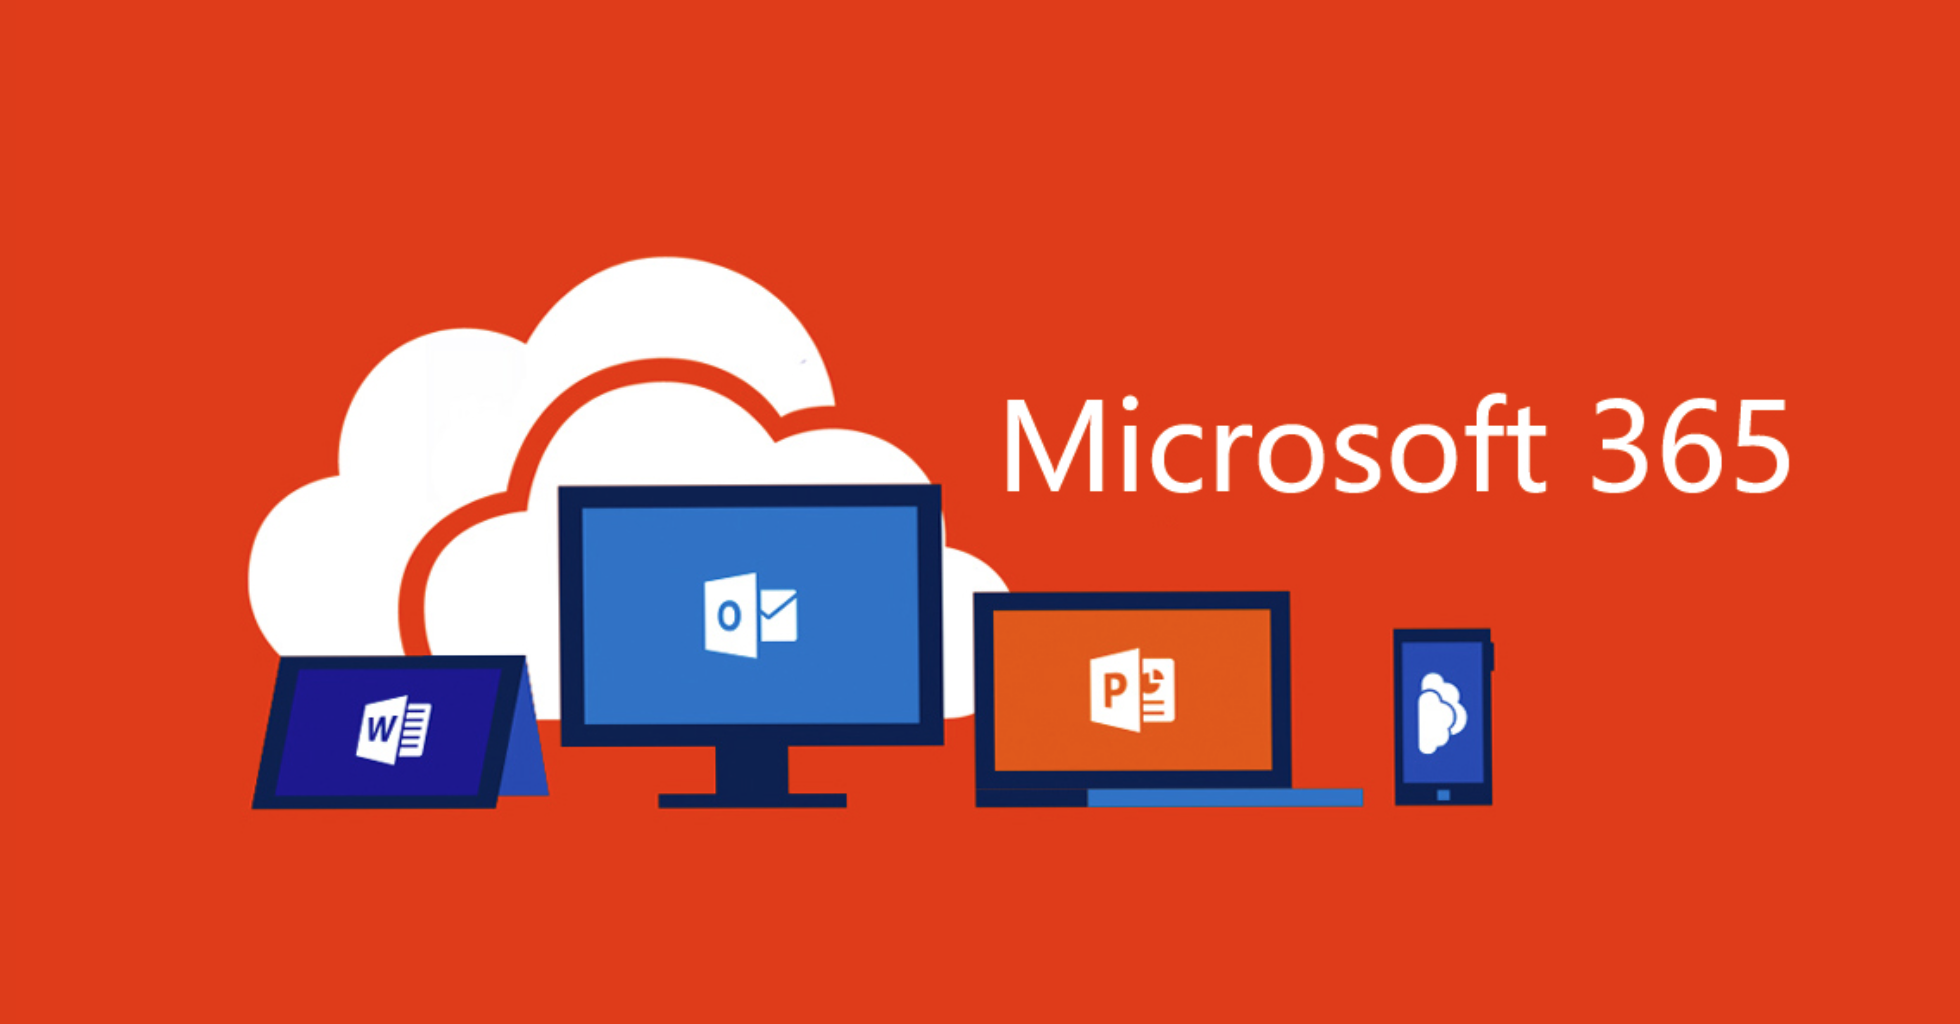 Microsoft Office - Microsoft 365